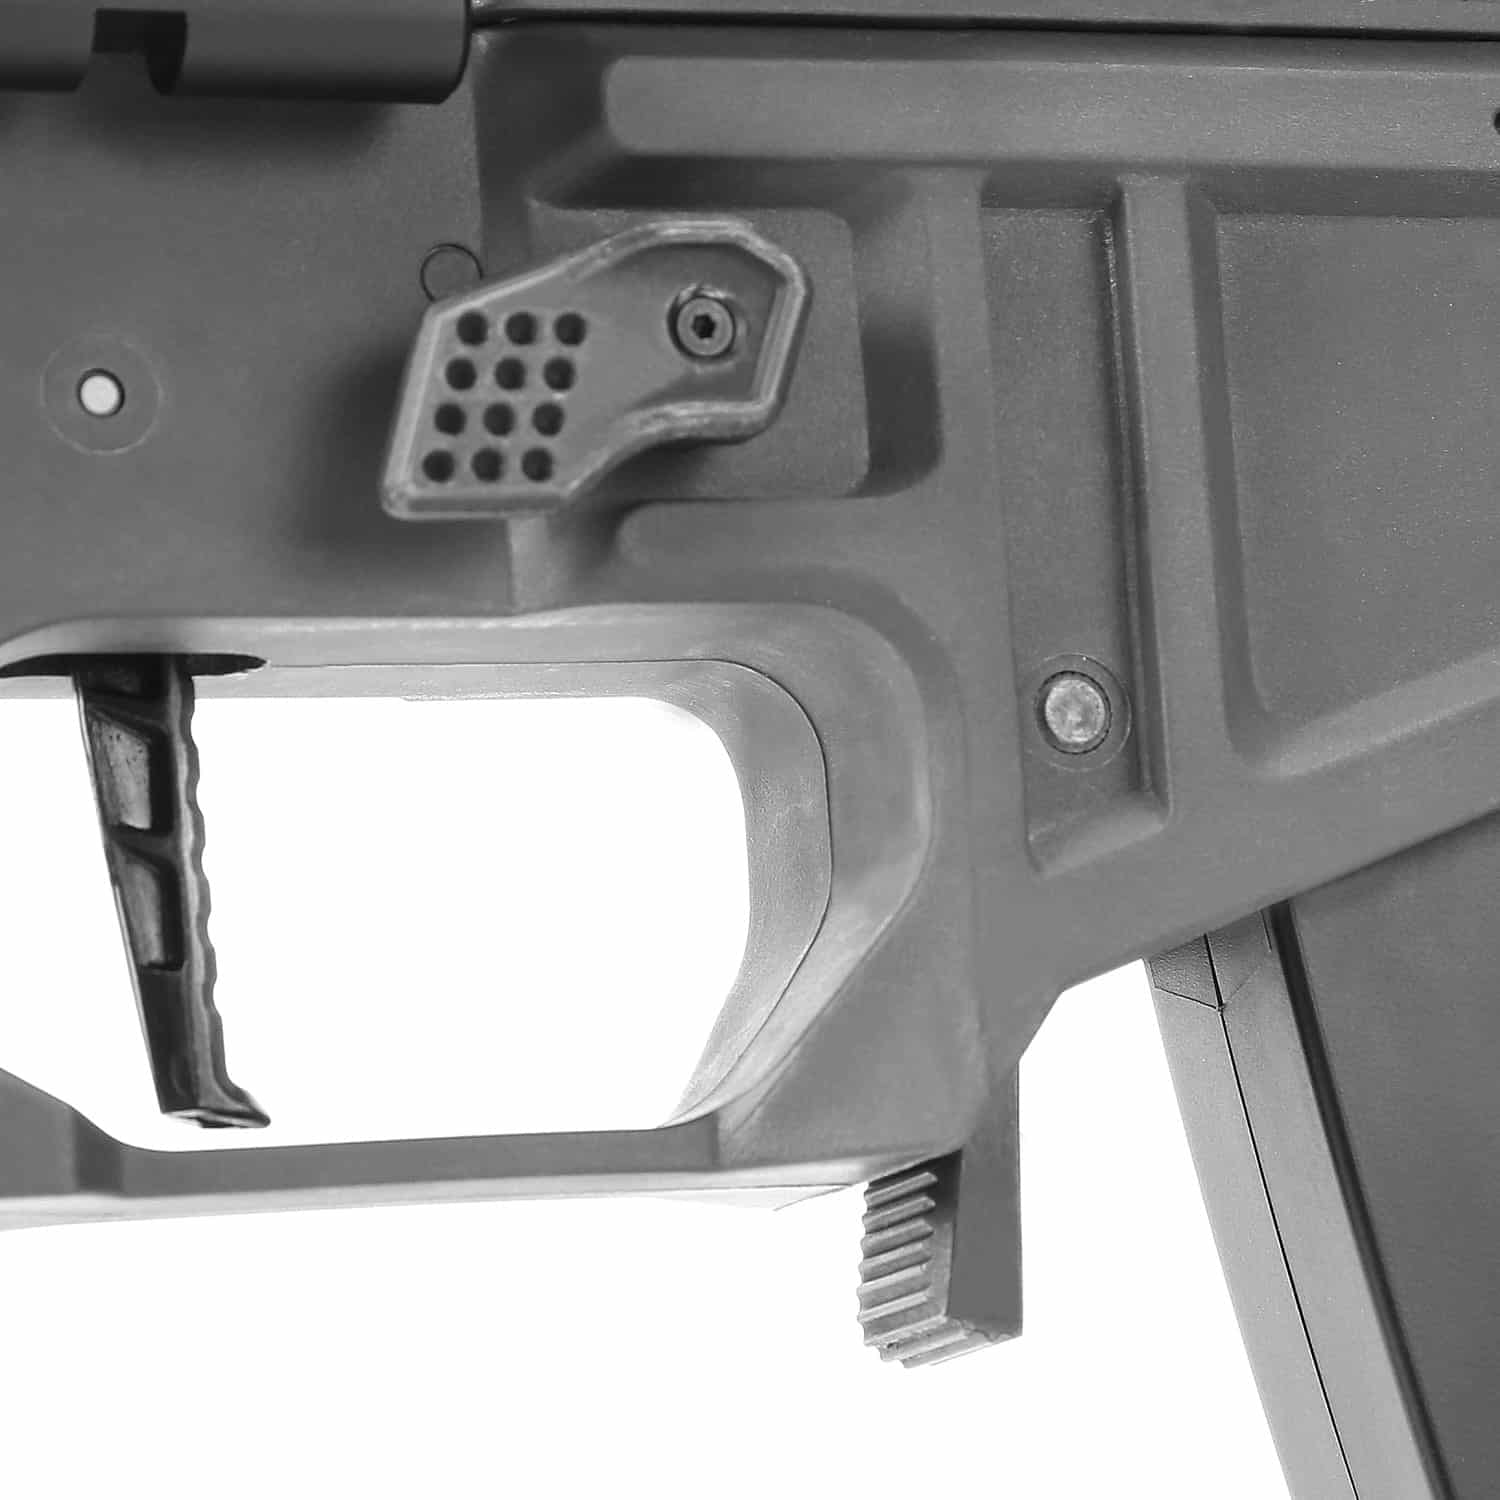 King Arms PDW 9mm SBR SD - Gun Metal Grey